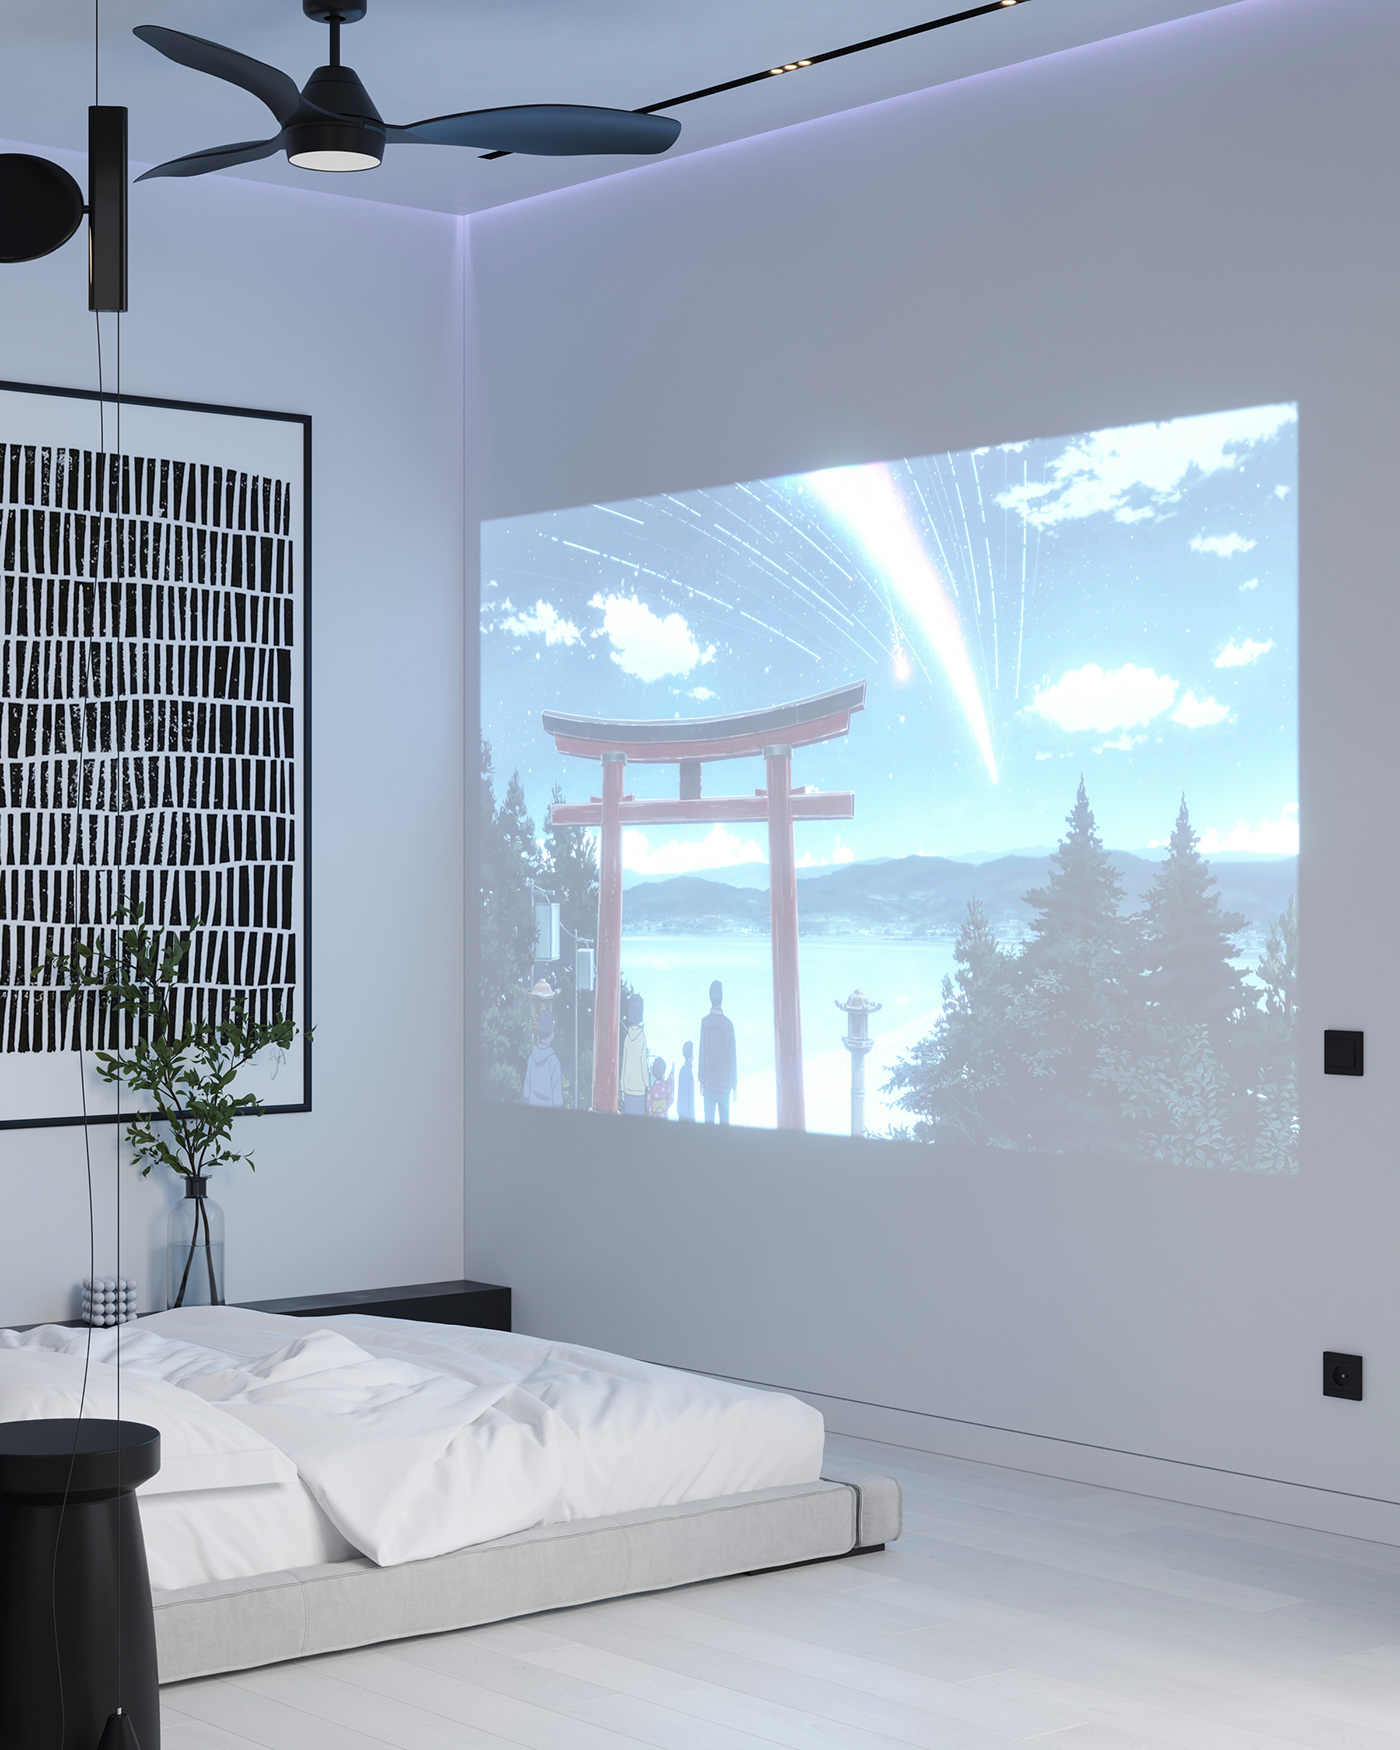 3ds max architecture archviz bedroom corona exterior interior design  neon lights Render visualization